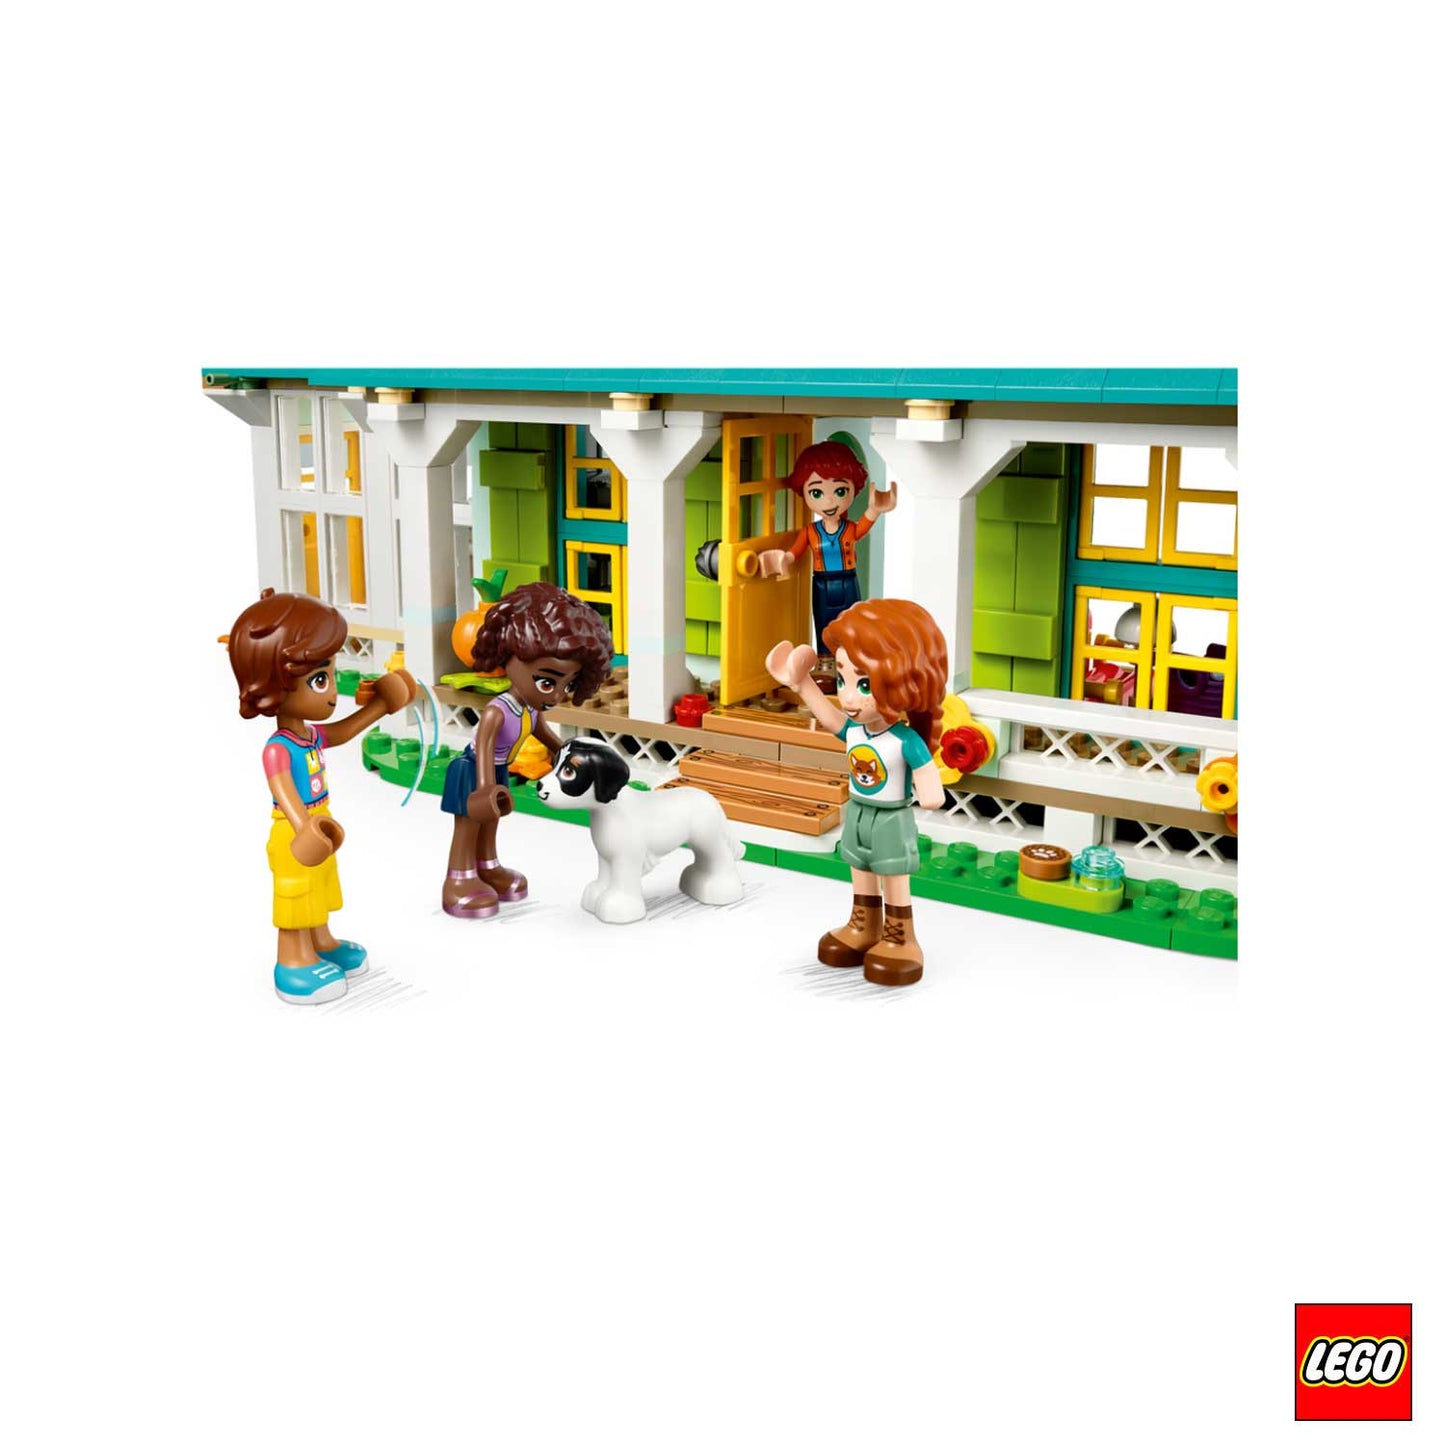 Lego - Friends Autumn's house 41730